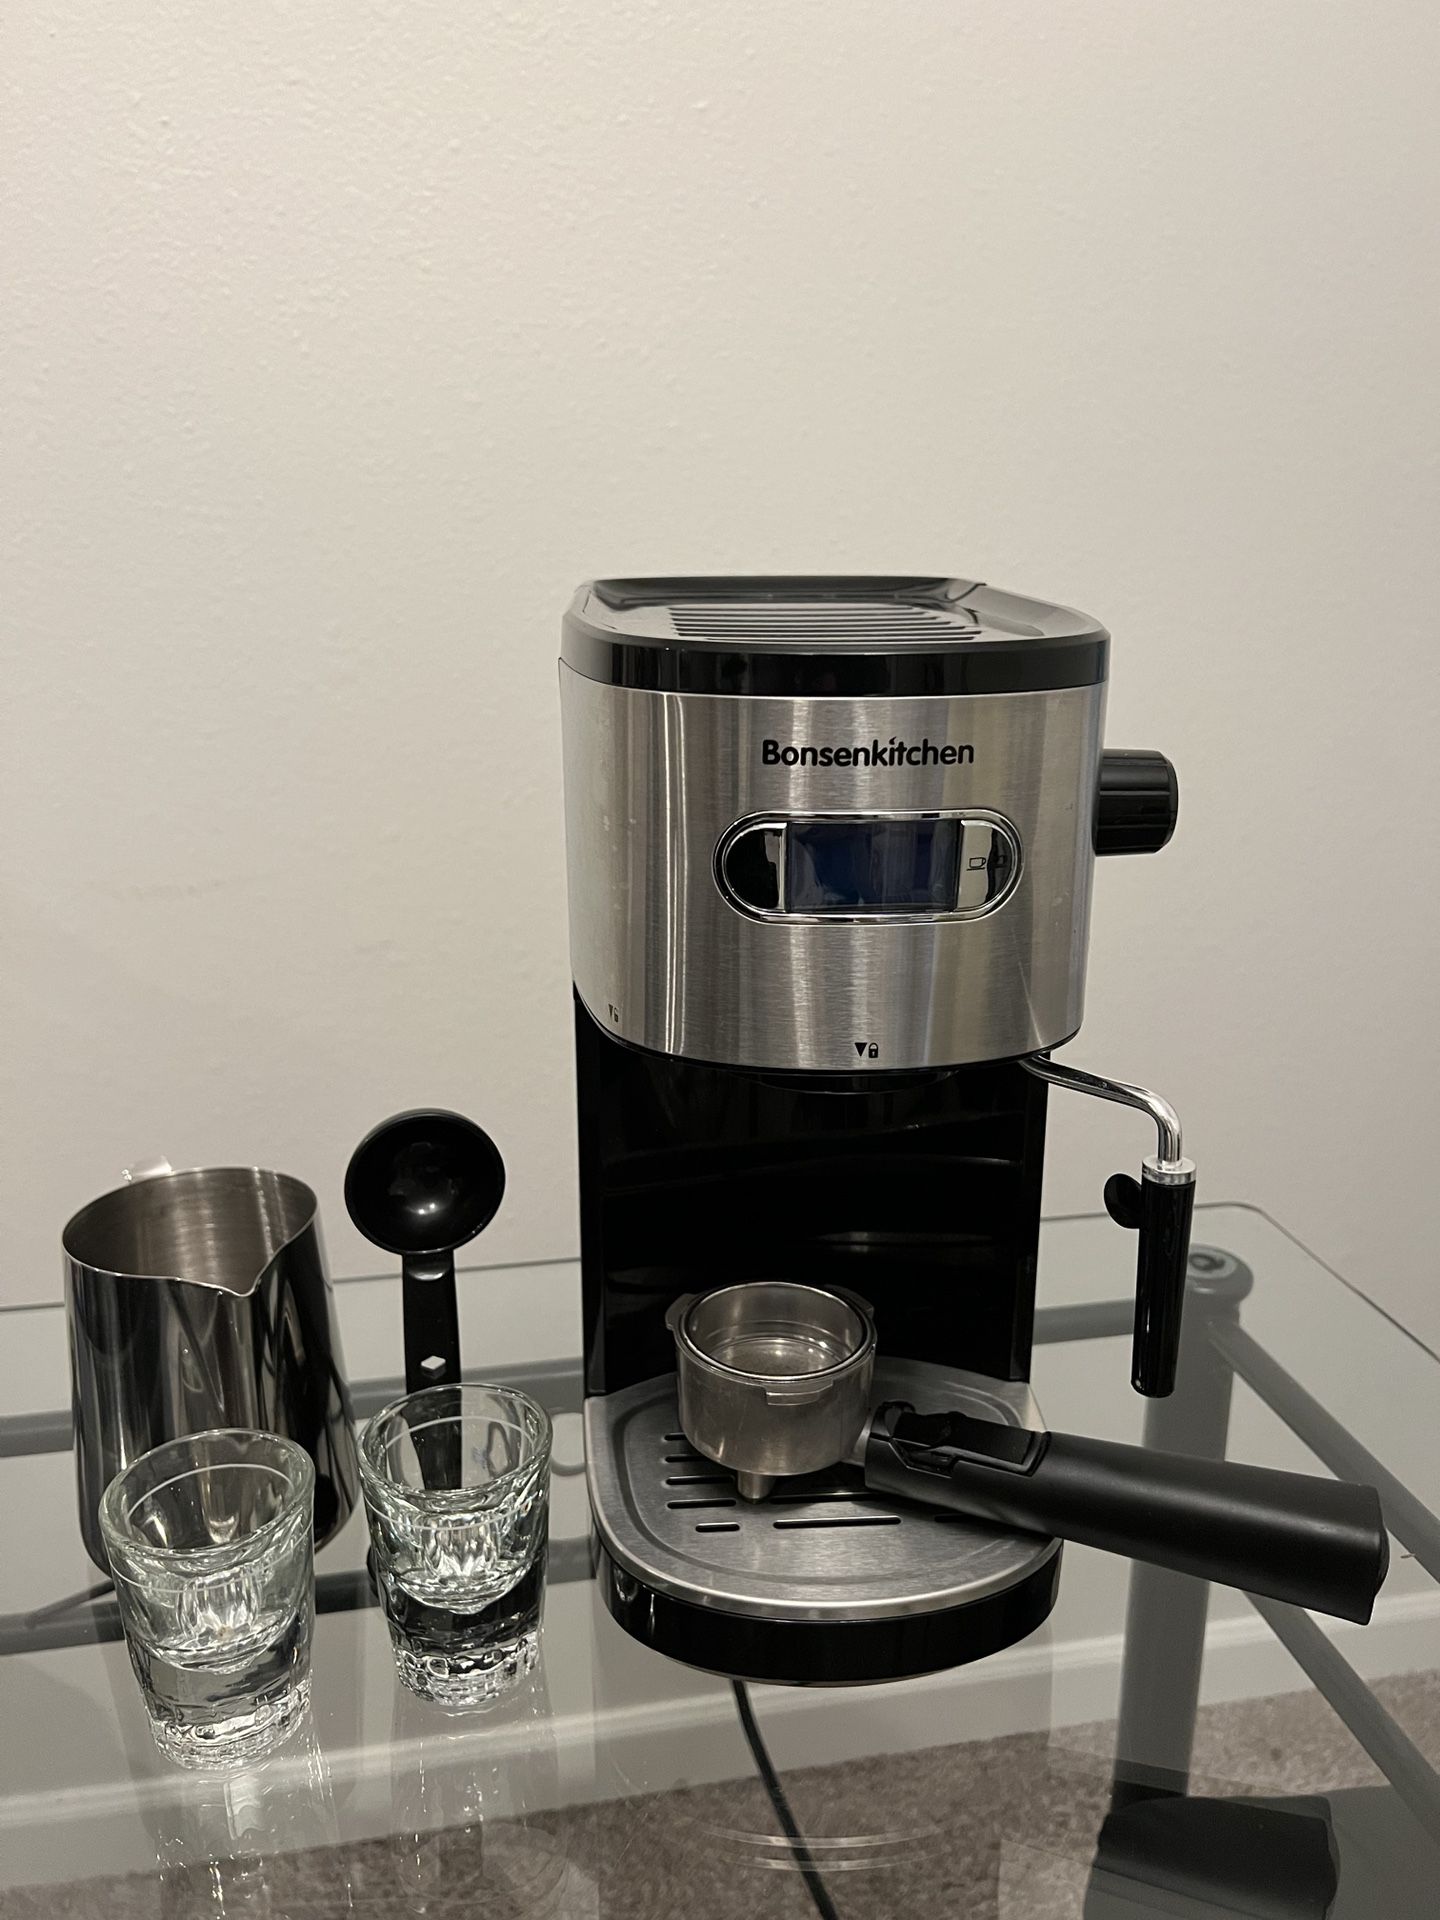 How To Use The Bonsenkitchen Espresso Machine